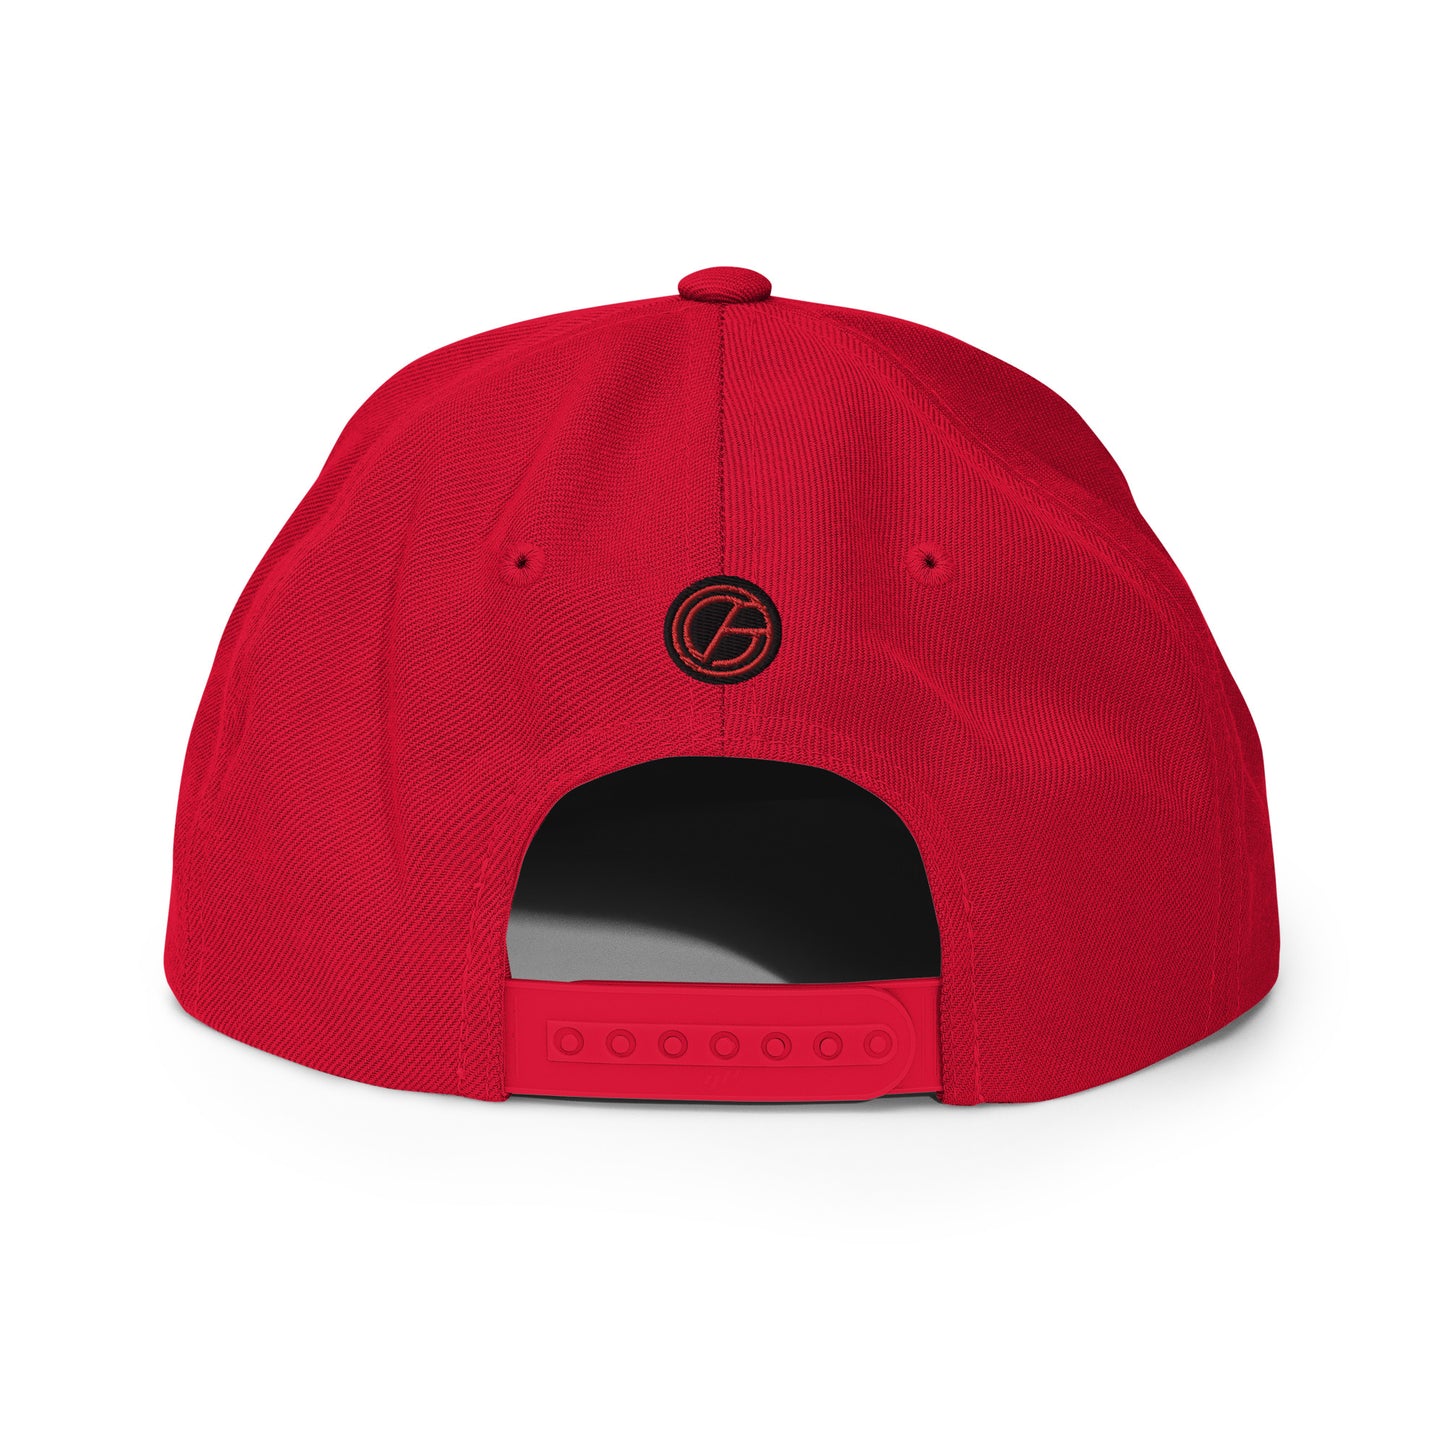 Scorebag Snapback Hat